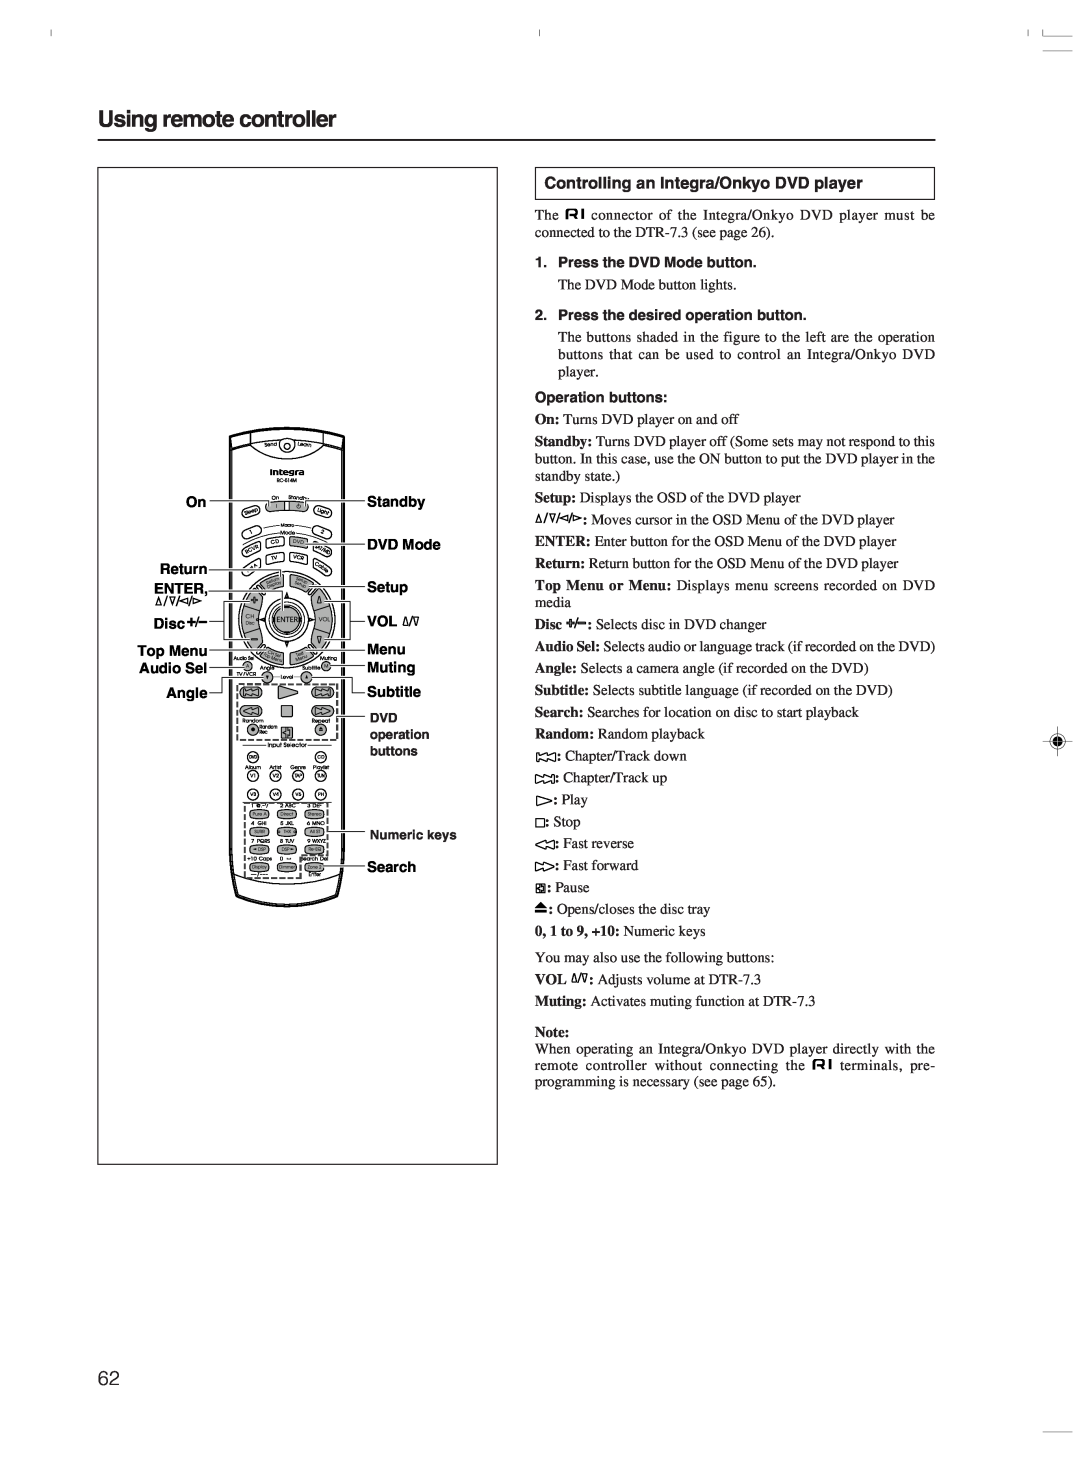 Integra DTR-7.3 instruction manual Using remote controller, Controlling an Integra/Onkyo DVD player 